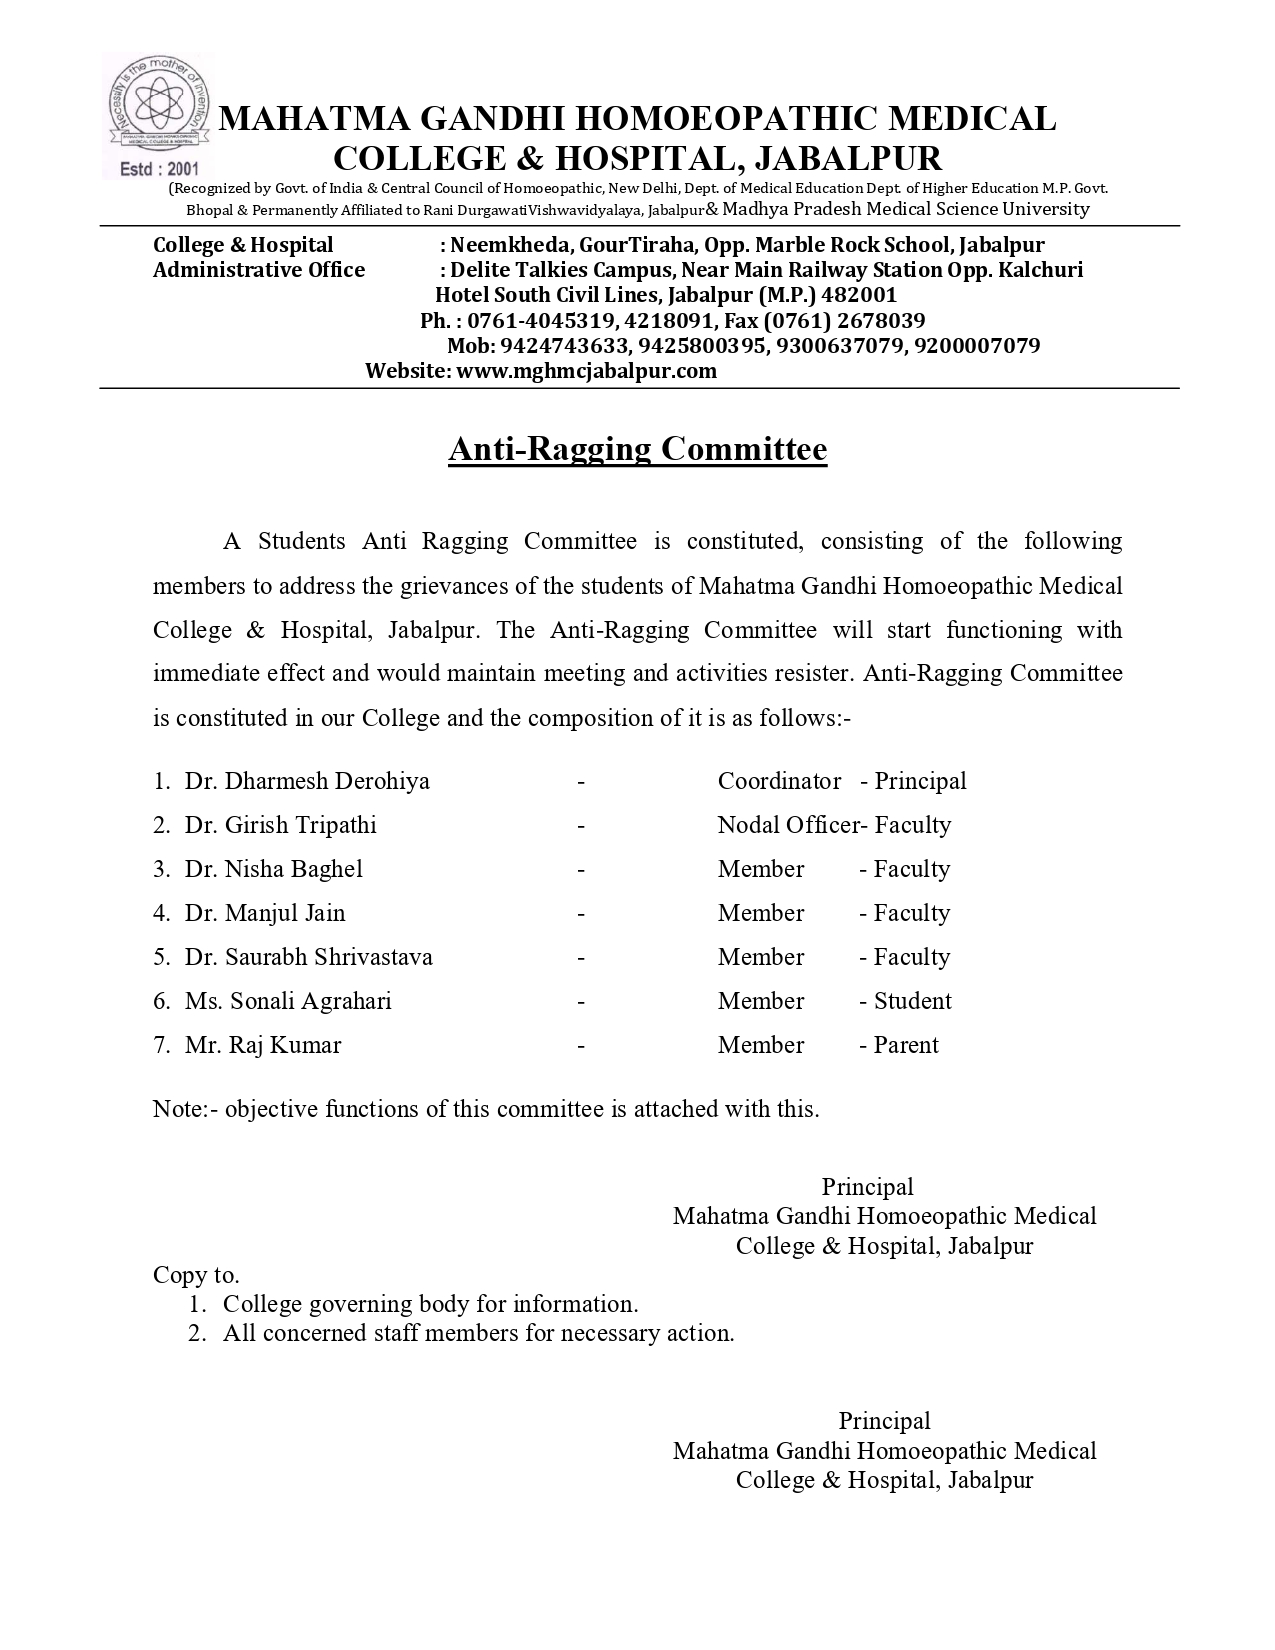 Mahatma Gandhi Homoeopathic Medical College & Hospital Anti-Ragging Committee